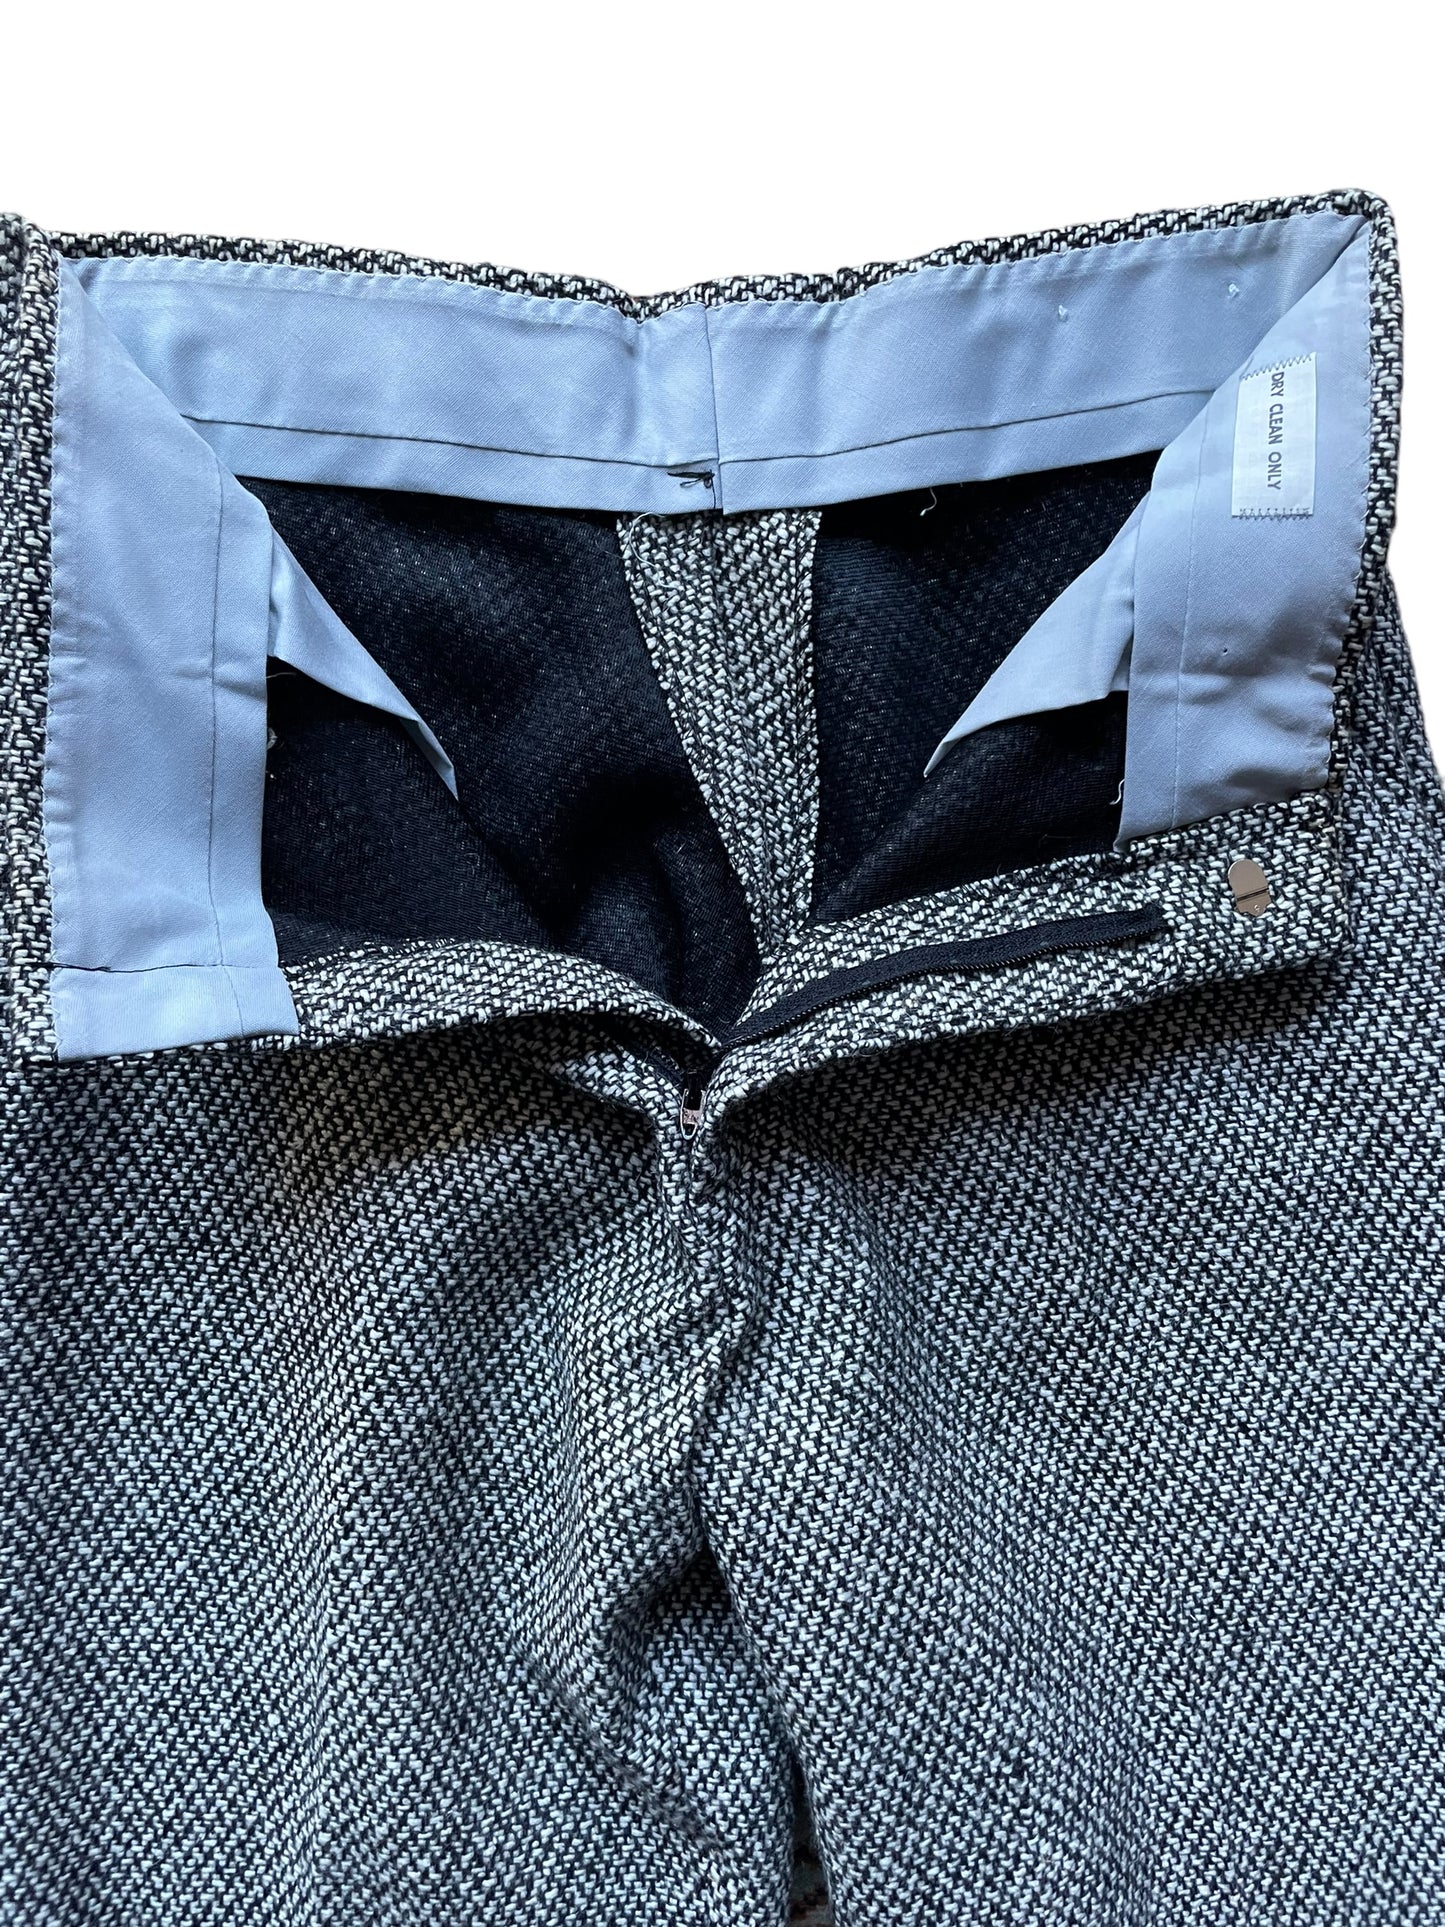 Open view of Vintage 1970s Deadstock Wool Blend Tweed Trousers W30 | Barn Owl Vintage Seattle | Vintage Trousers